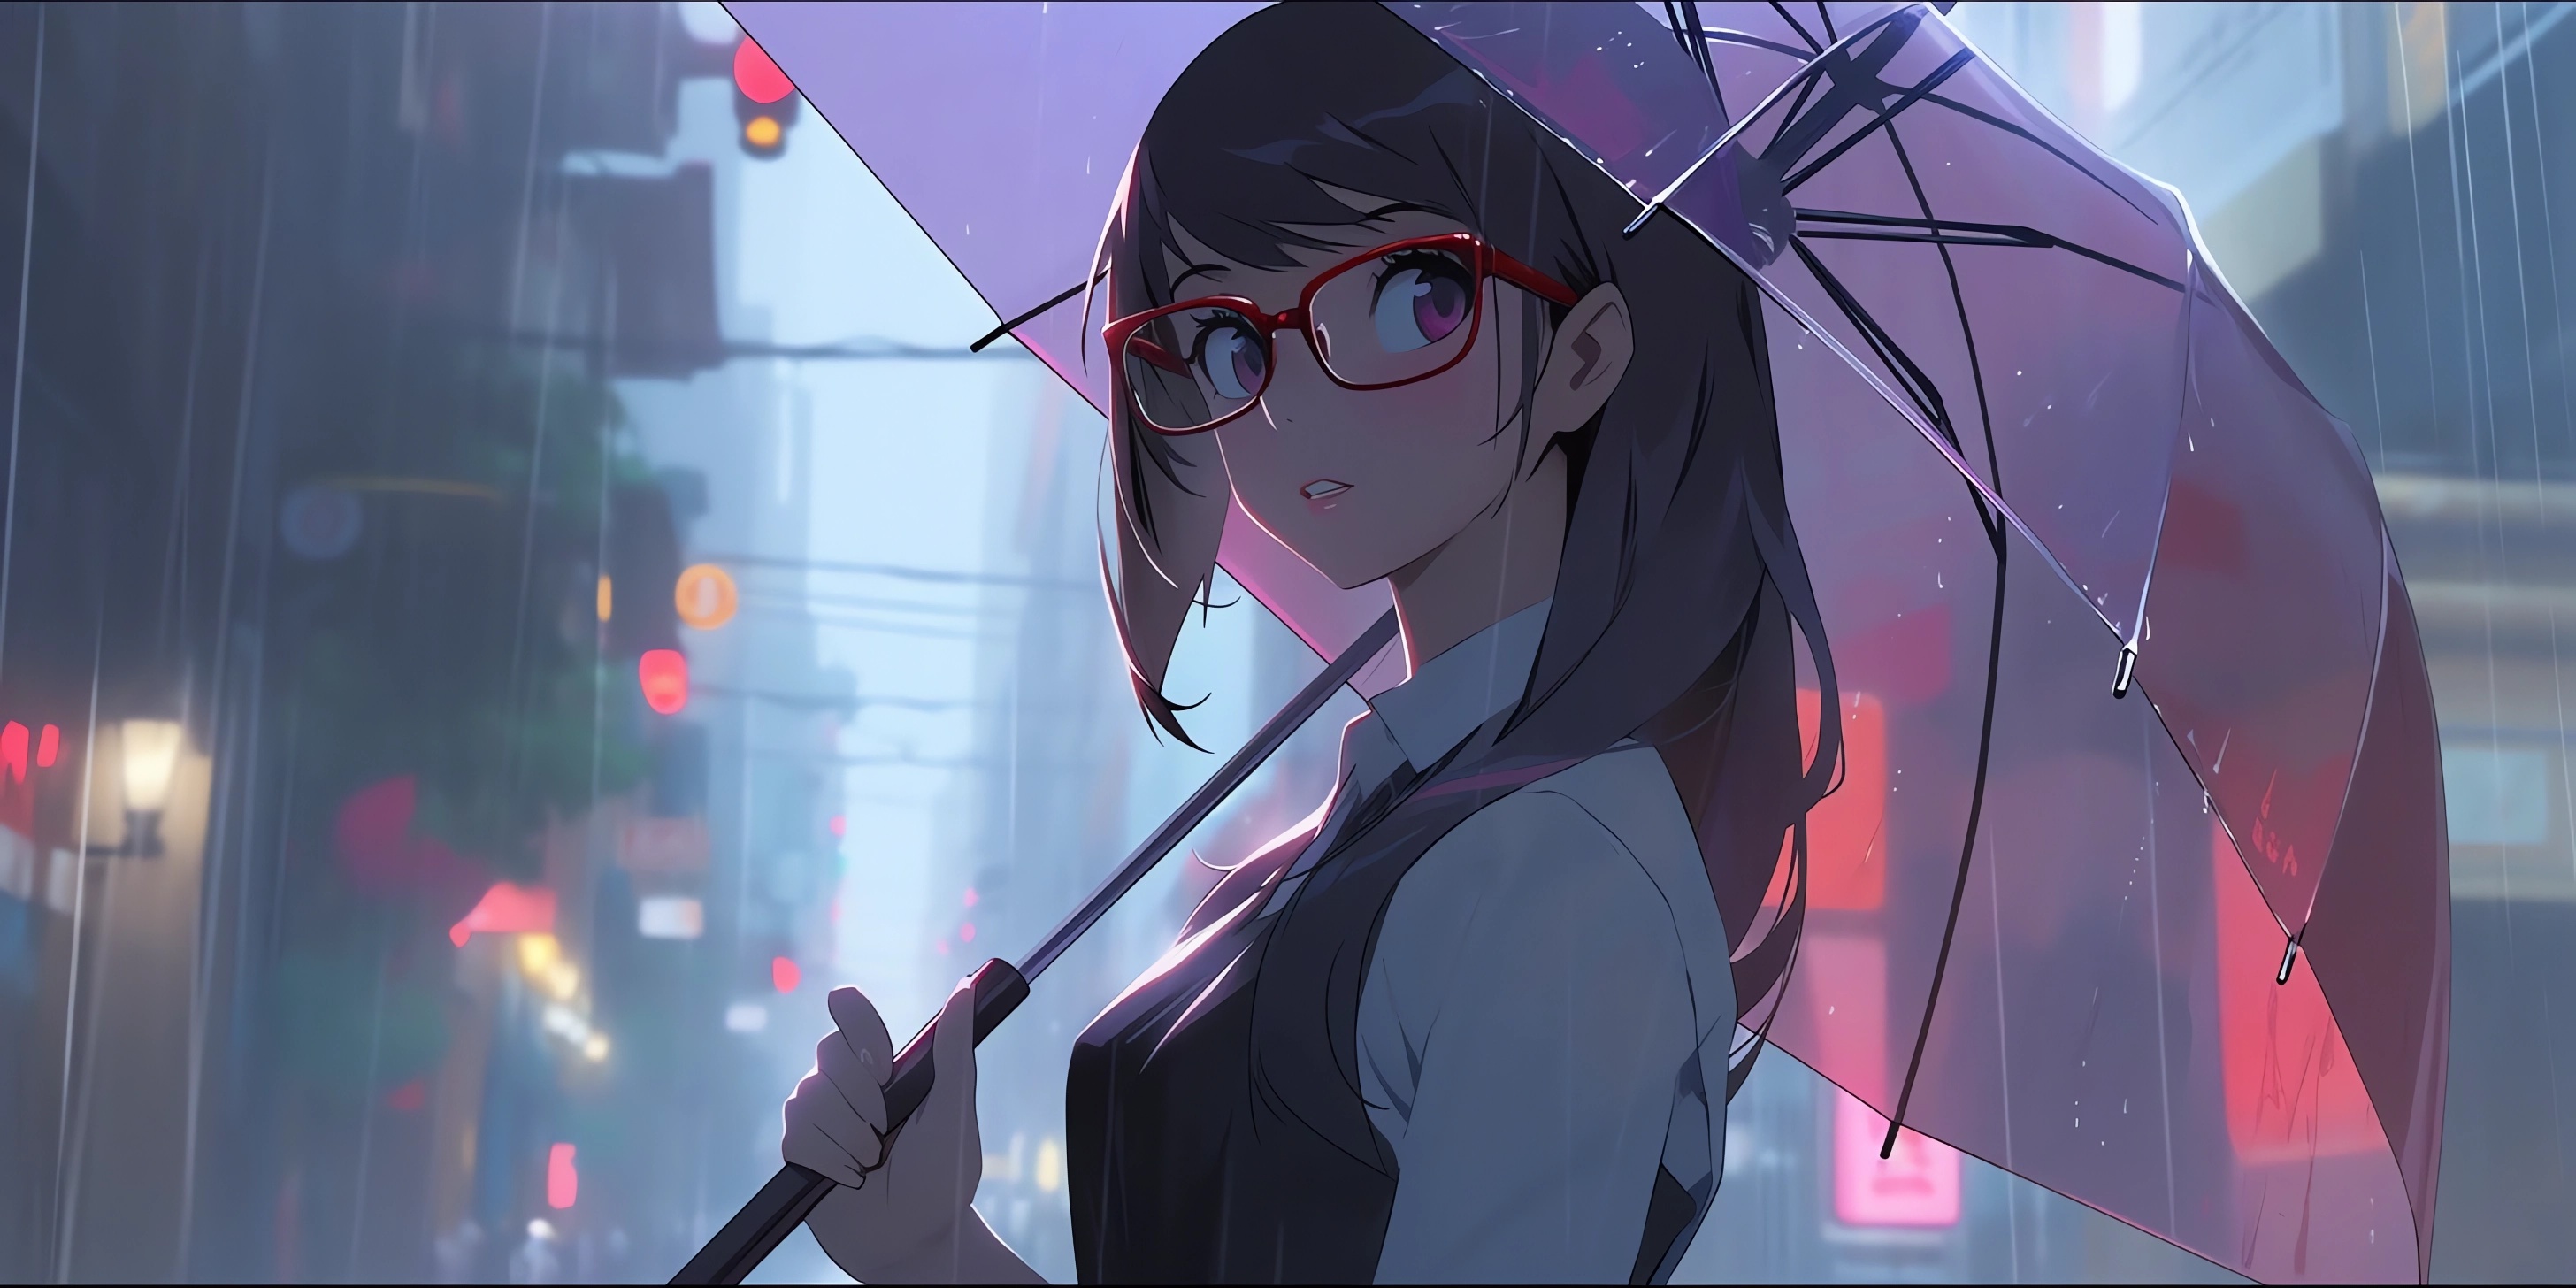 Anime 2912x1456 anime anime girls umbrella rain schoolgirl school uniform glasses looking at viewer long hair lights wet blurred blurry background AI art